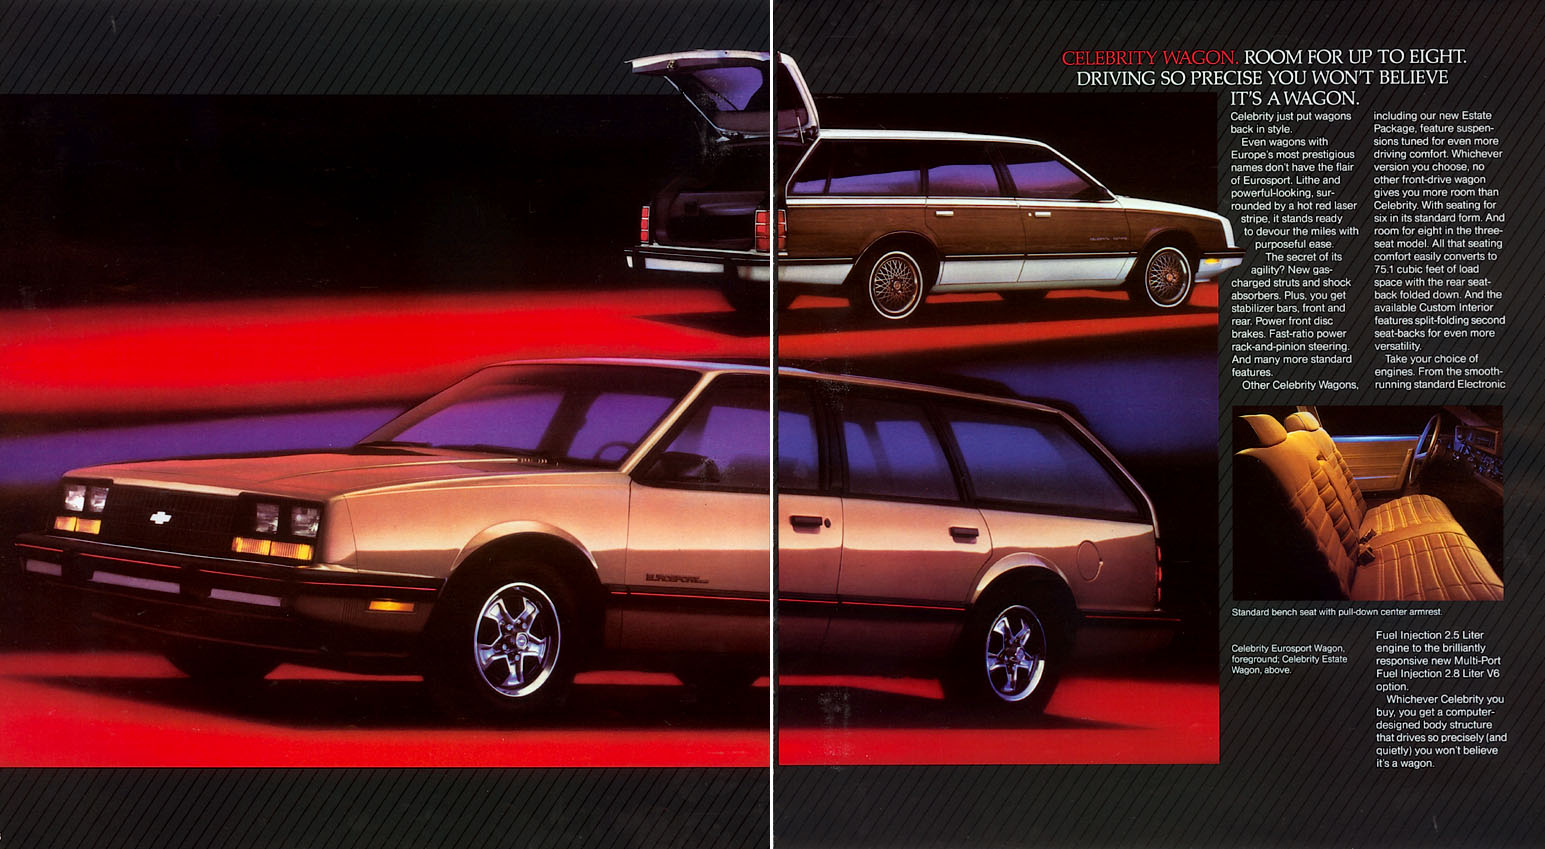 1985_Chevrolet_Wagons-04